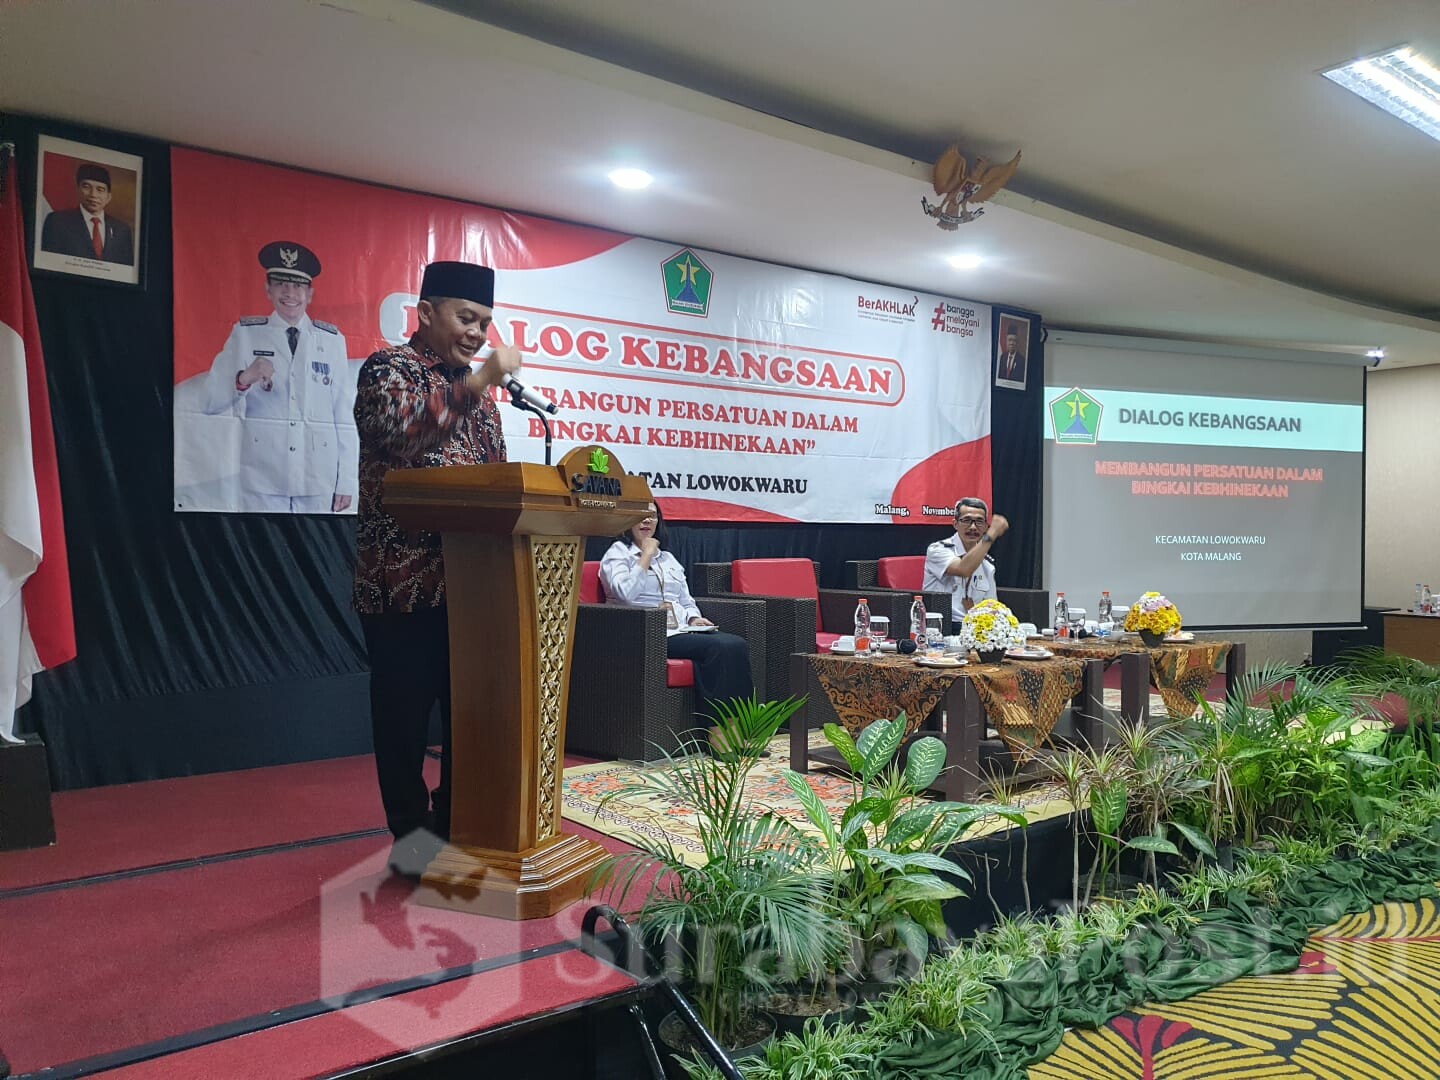 Jadi Narasumber Dialog Kebangsaan, Ketua DPRD Kota Malang Ajak Masyarakat Tetap Bersatu di Tengah Perbedaan